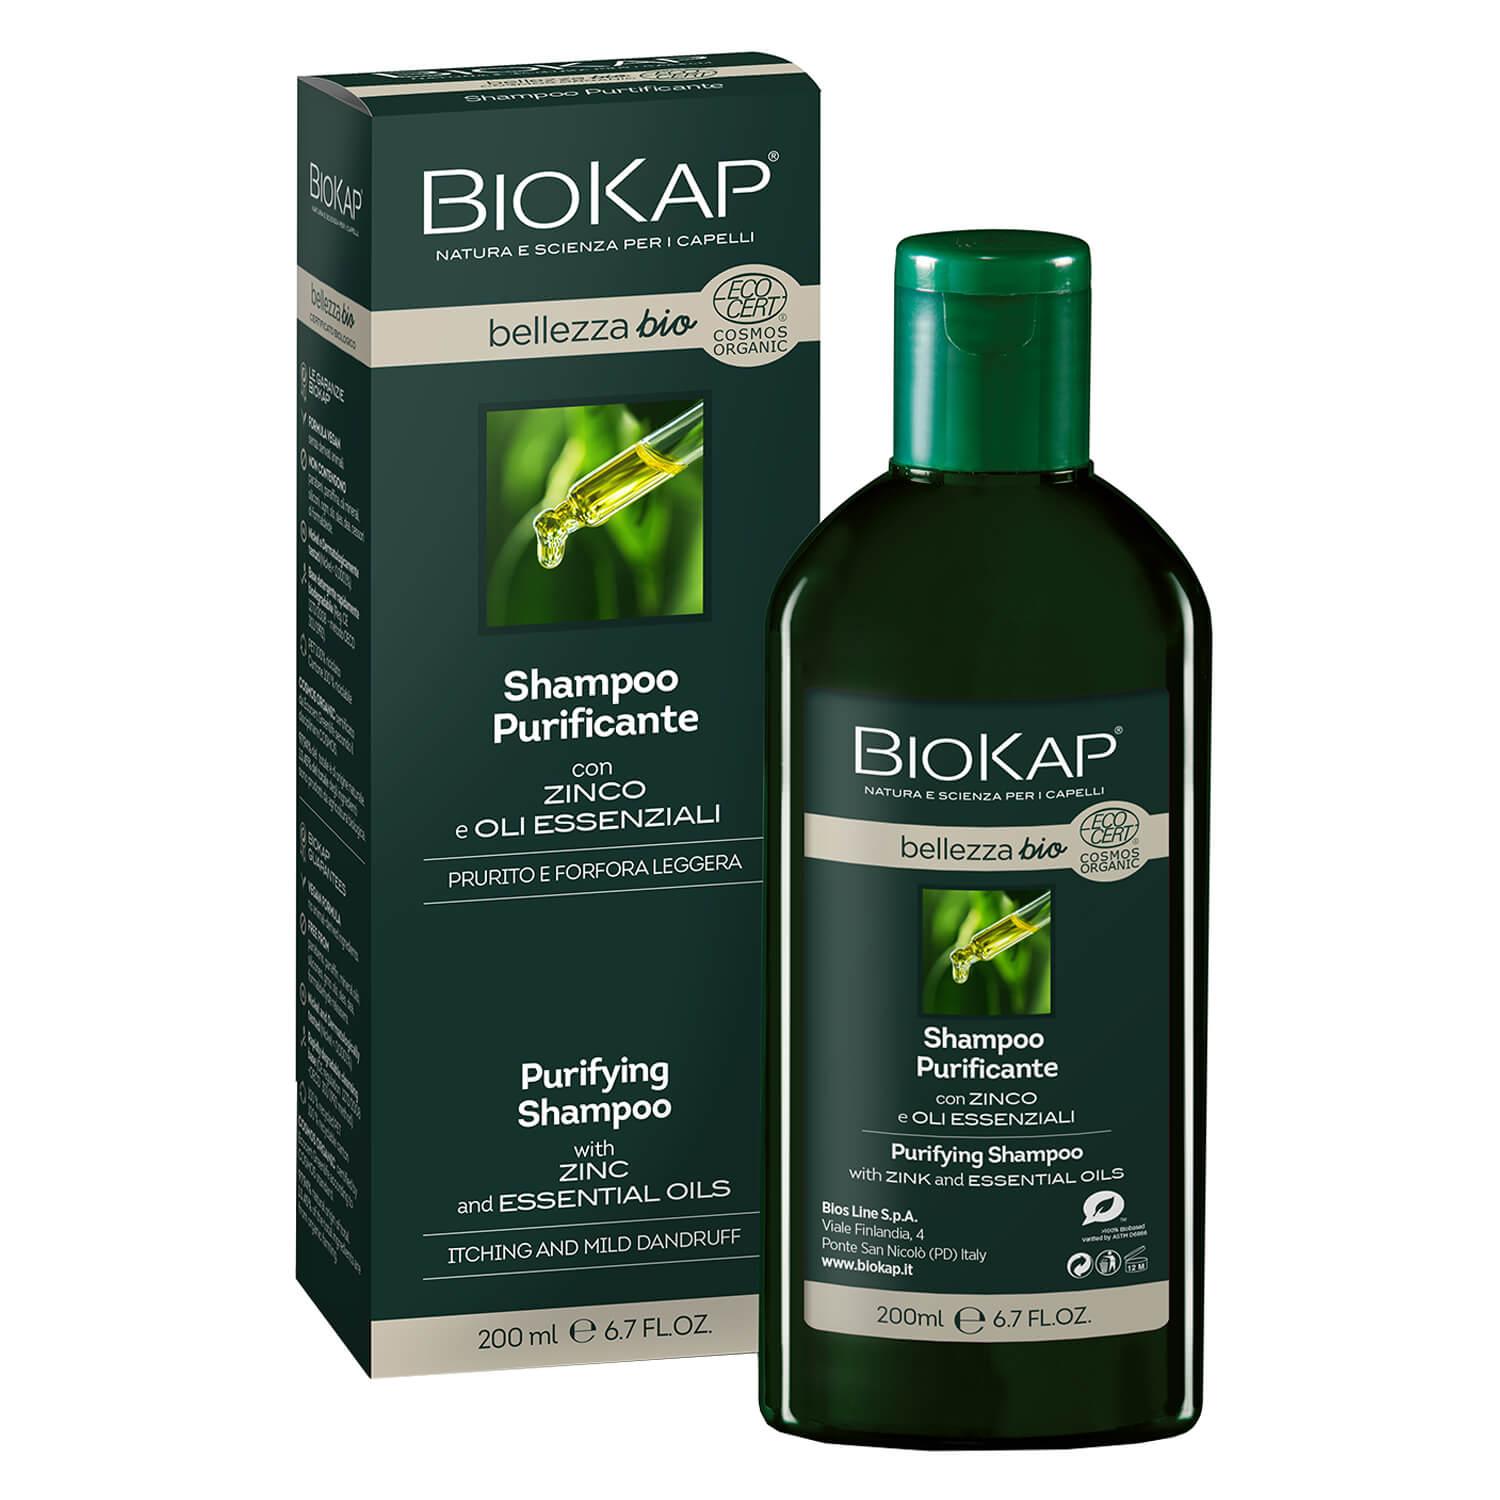 BIOKAP Bellezza - Purifying Shampoo